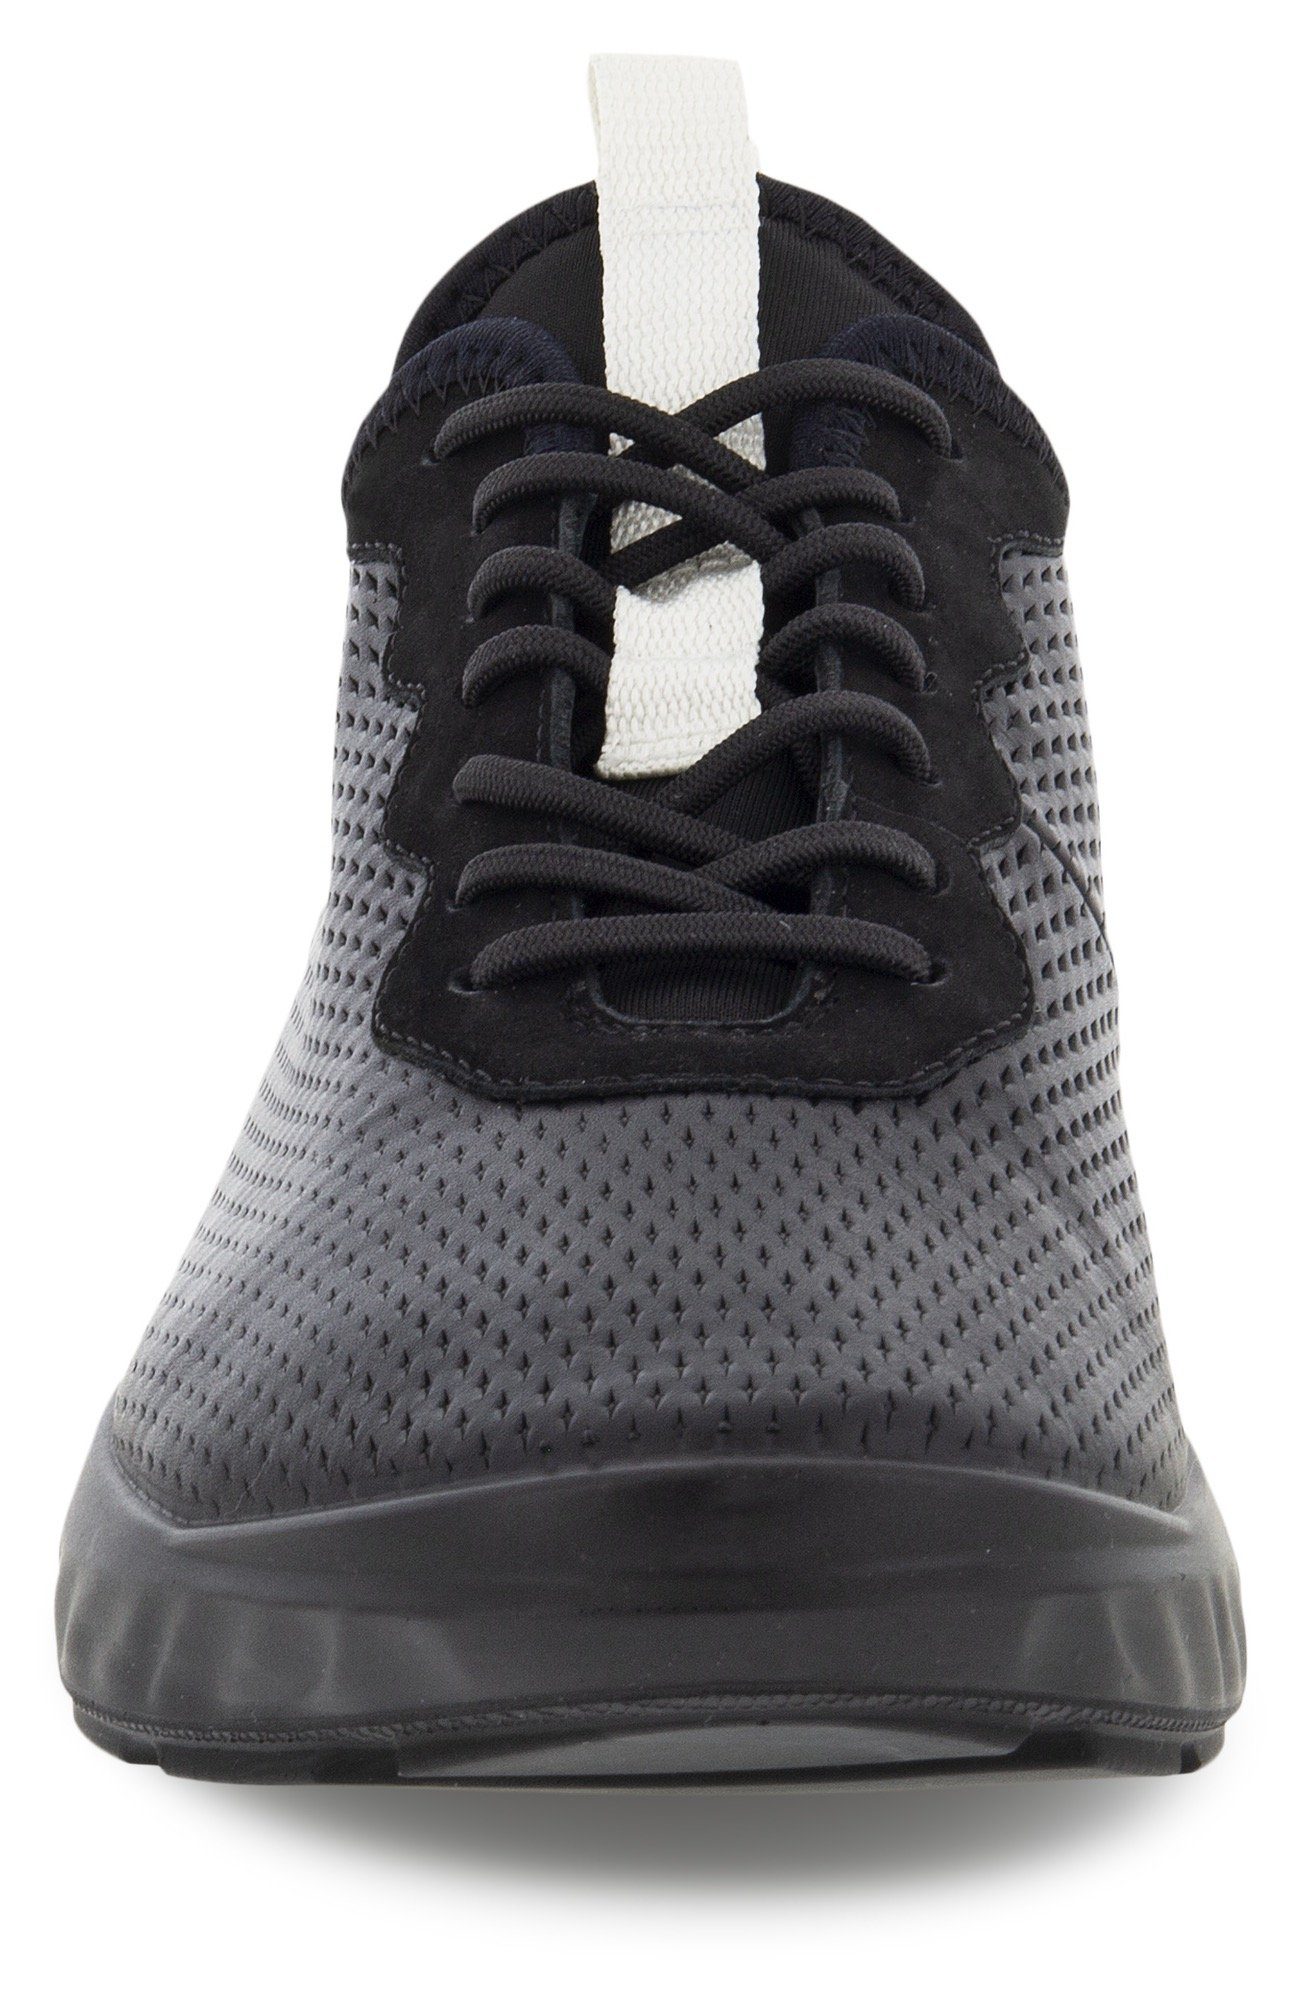 Ecco ATH-1FW Sneaker in sportivem weiß schwarz Look